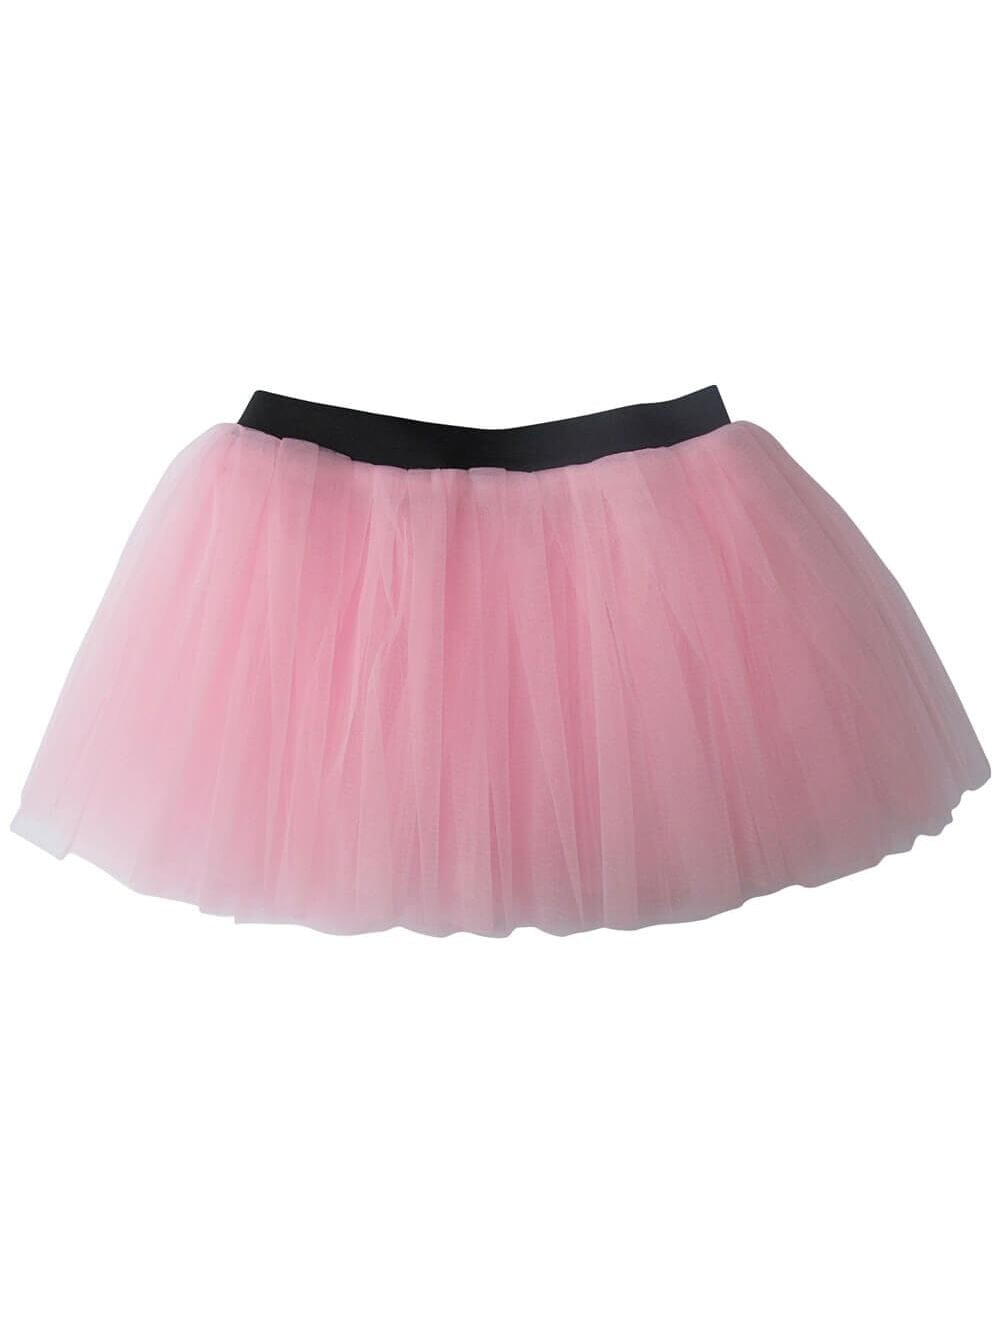 Pink Adult Size Women's 5K Running Skirt Tutu Costume - Sydney So Sweet